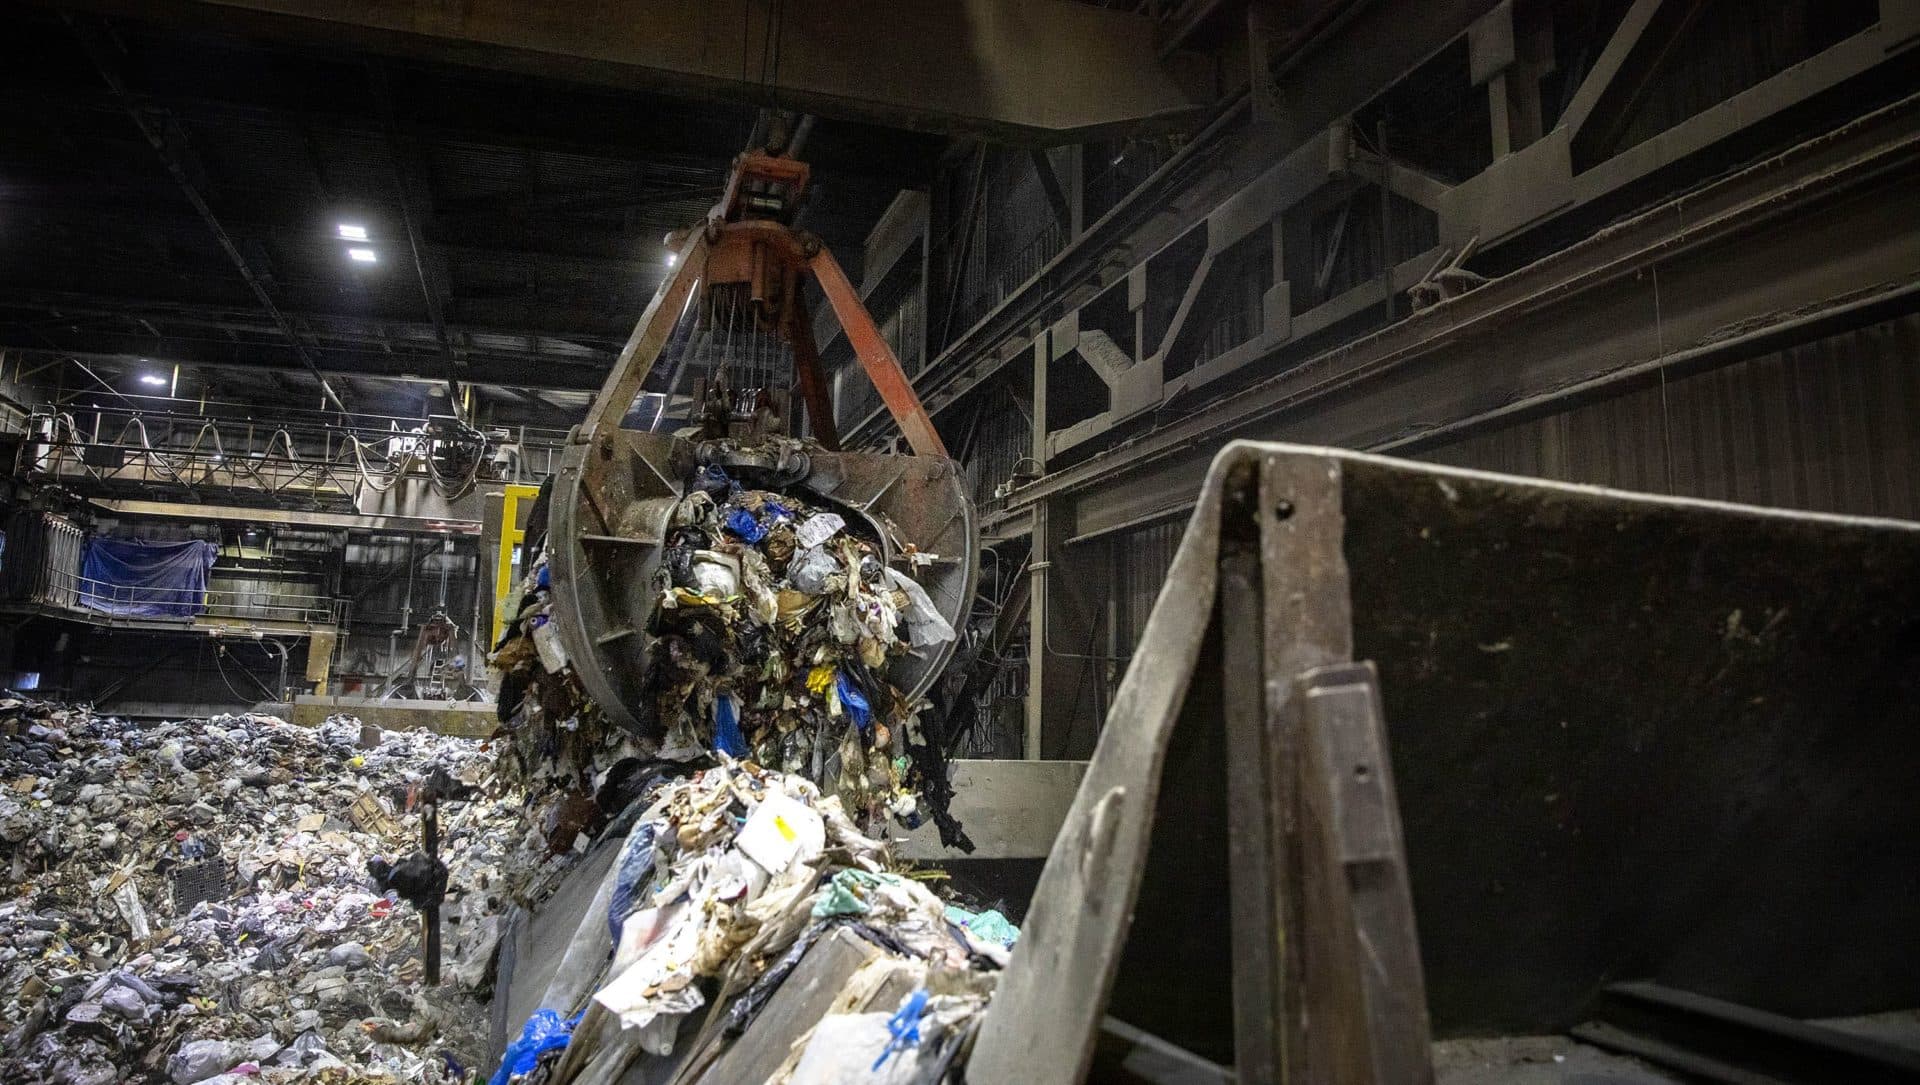 A crane drops garbage into the shoot leading to the incinerator, at Covanta's Haverhill waste facility. (Robin Lubbock/WBUR)